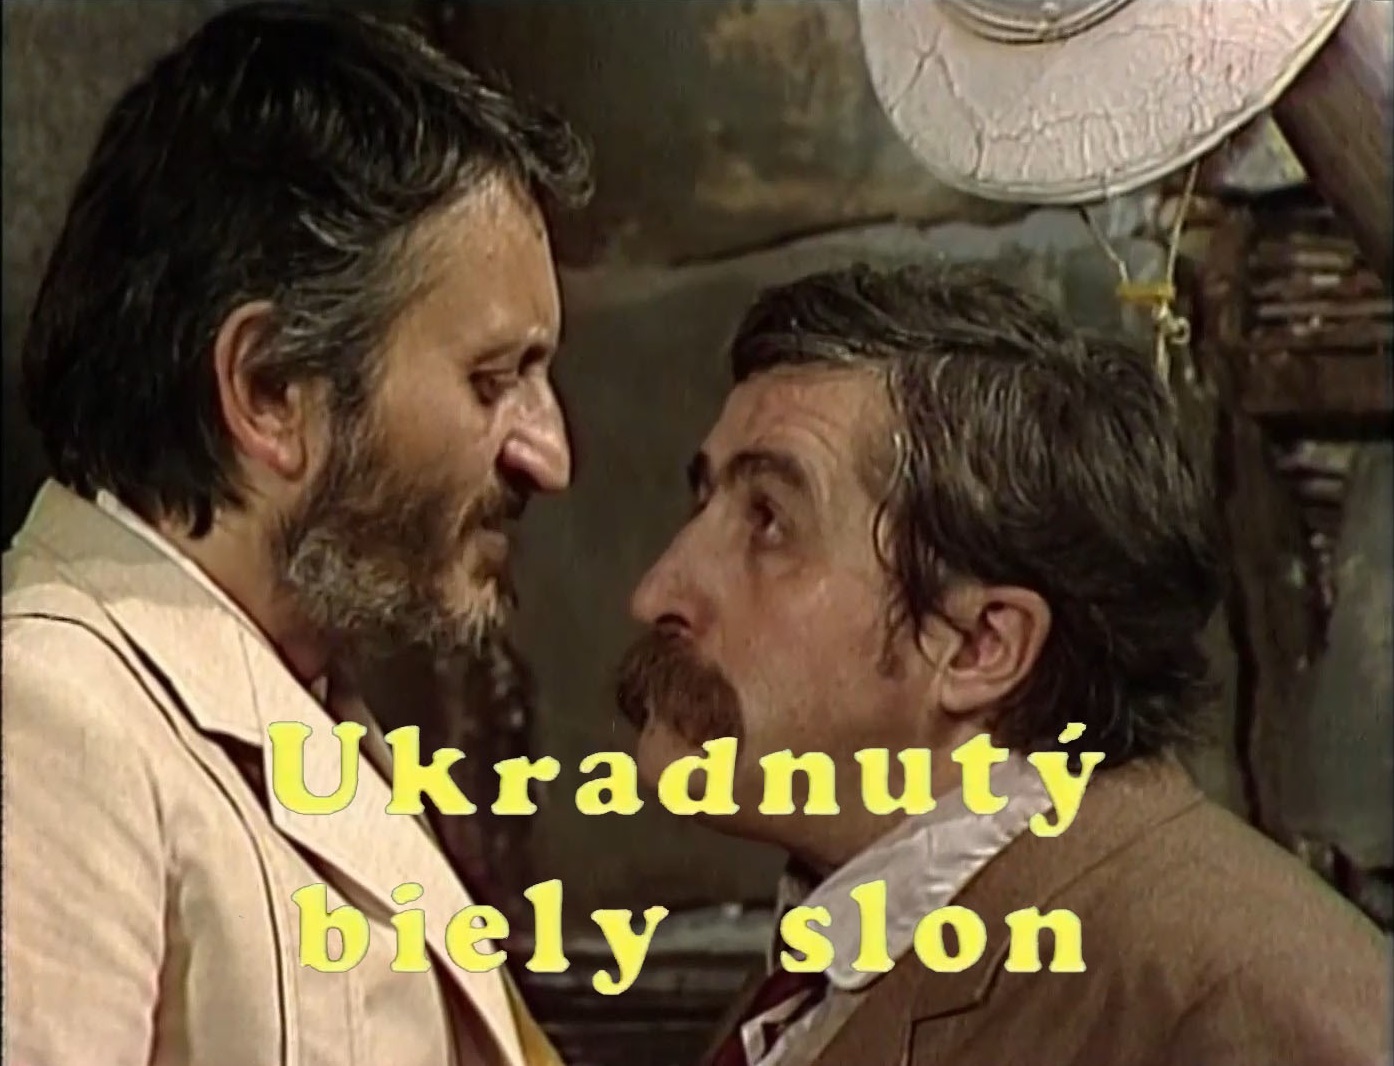 Stiahni si Filmy CZ/SK dabing Ukradnuty biely slon (1984)(SK)[TvRip] = CSFD 47%